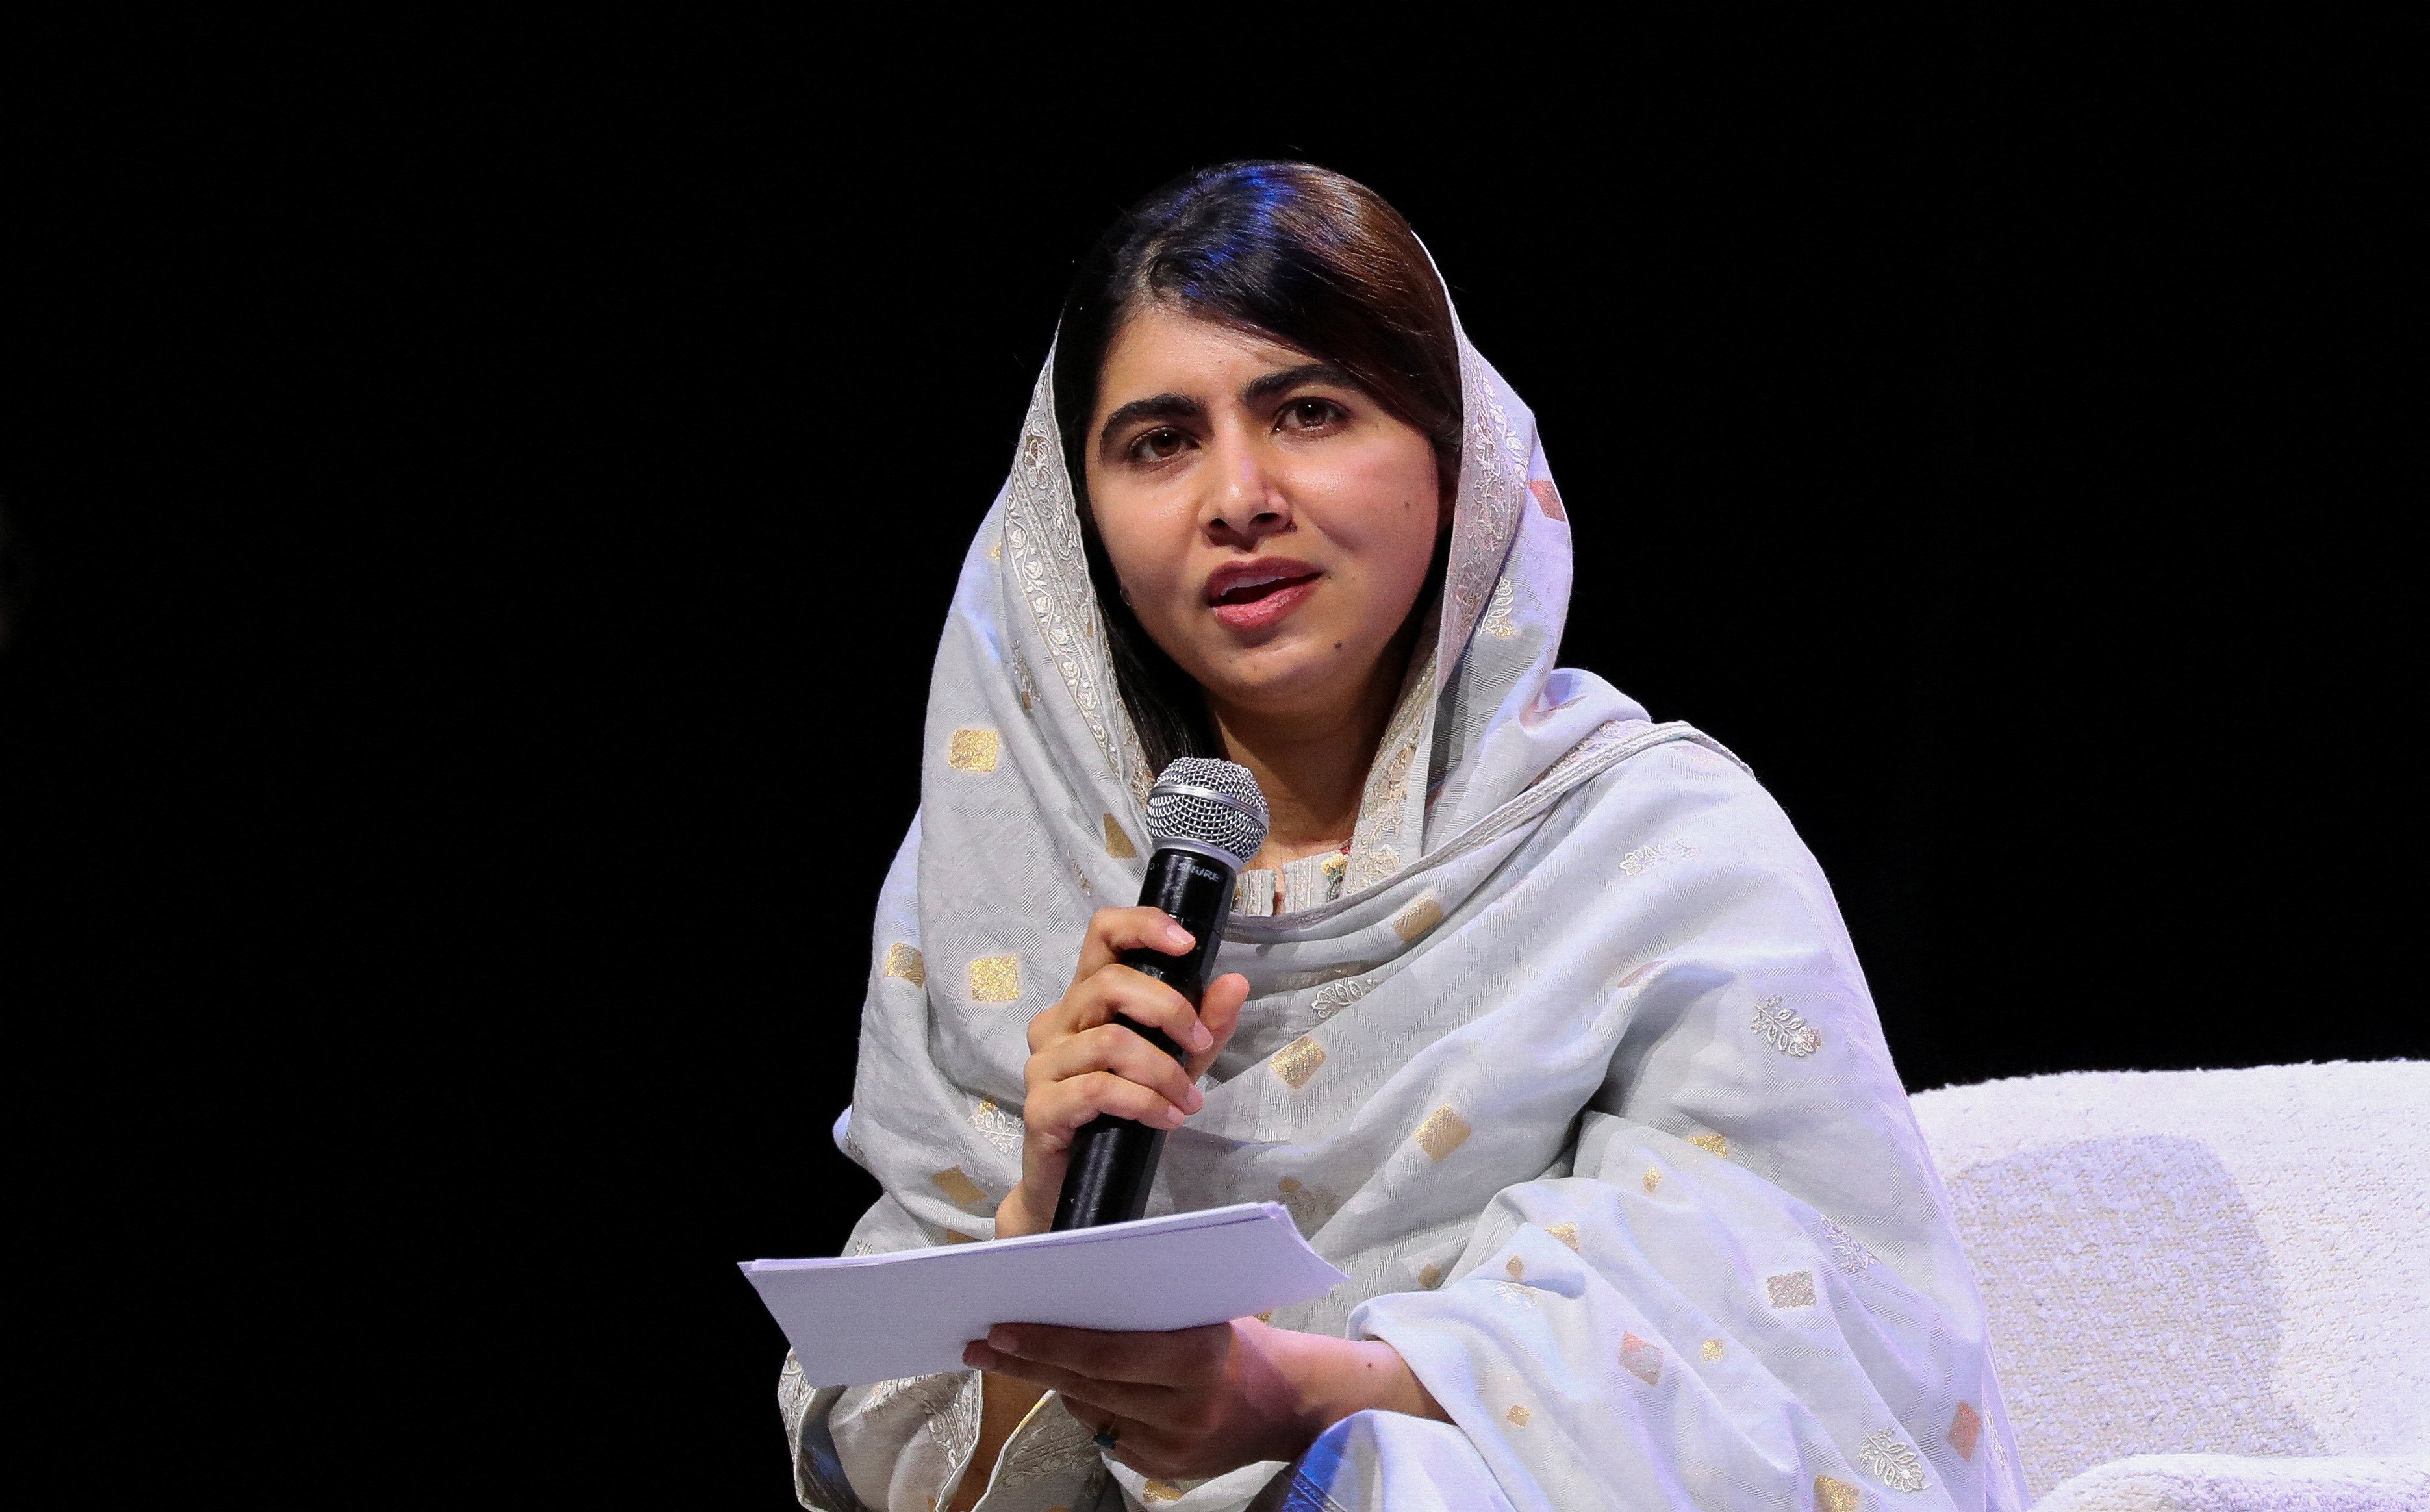 Malala slammed on internet for silence on Palestine